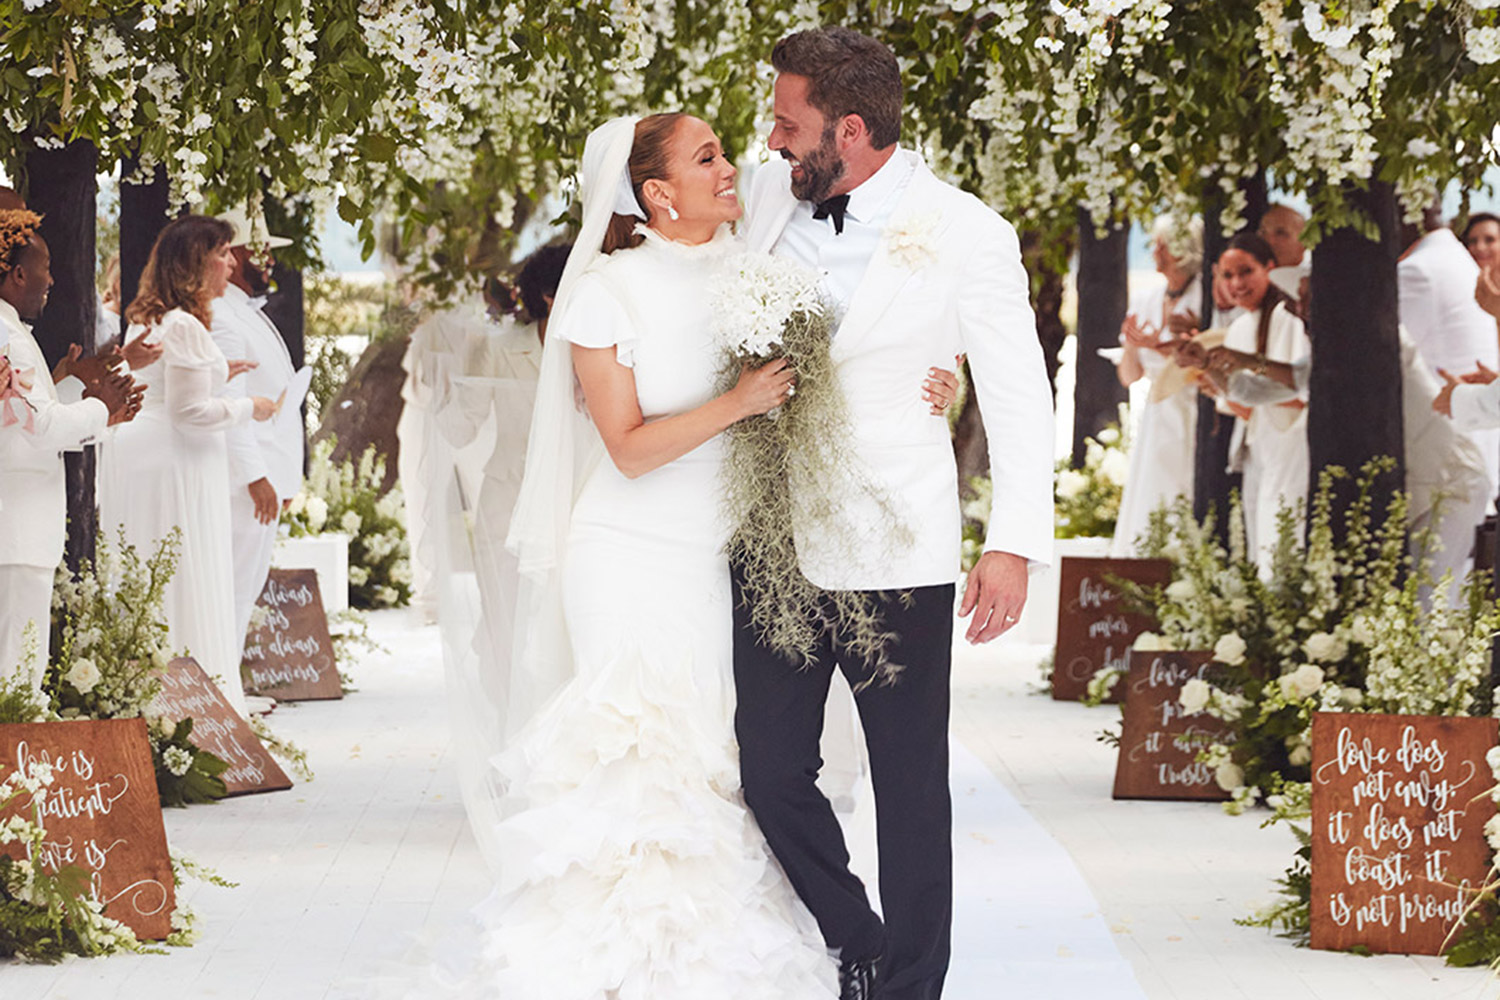 Ben Affleck and Jennifer Lopez's wedding pictures